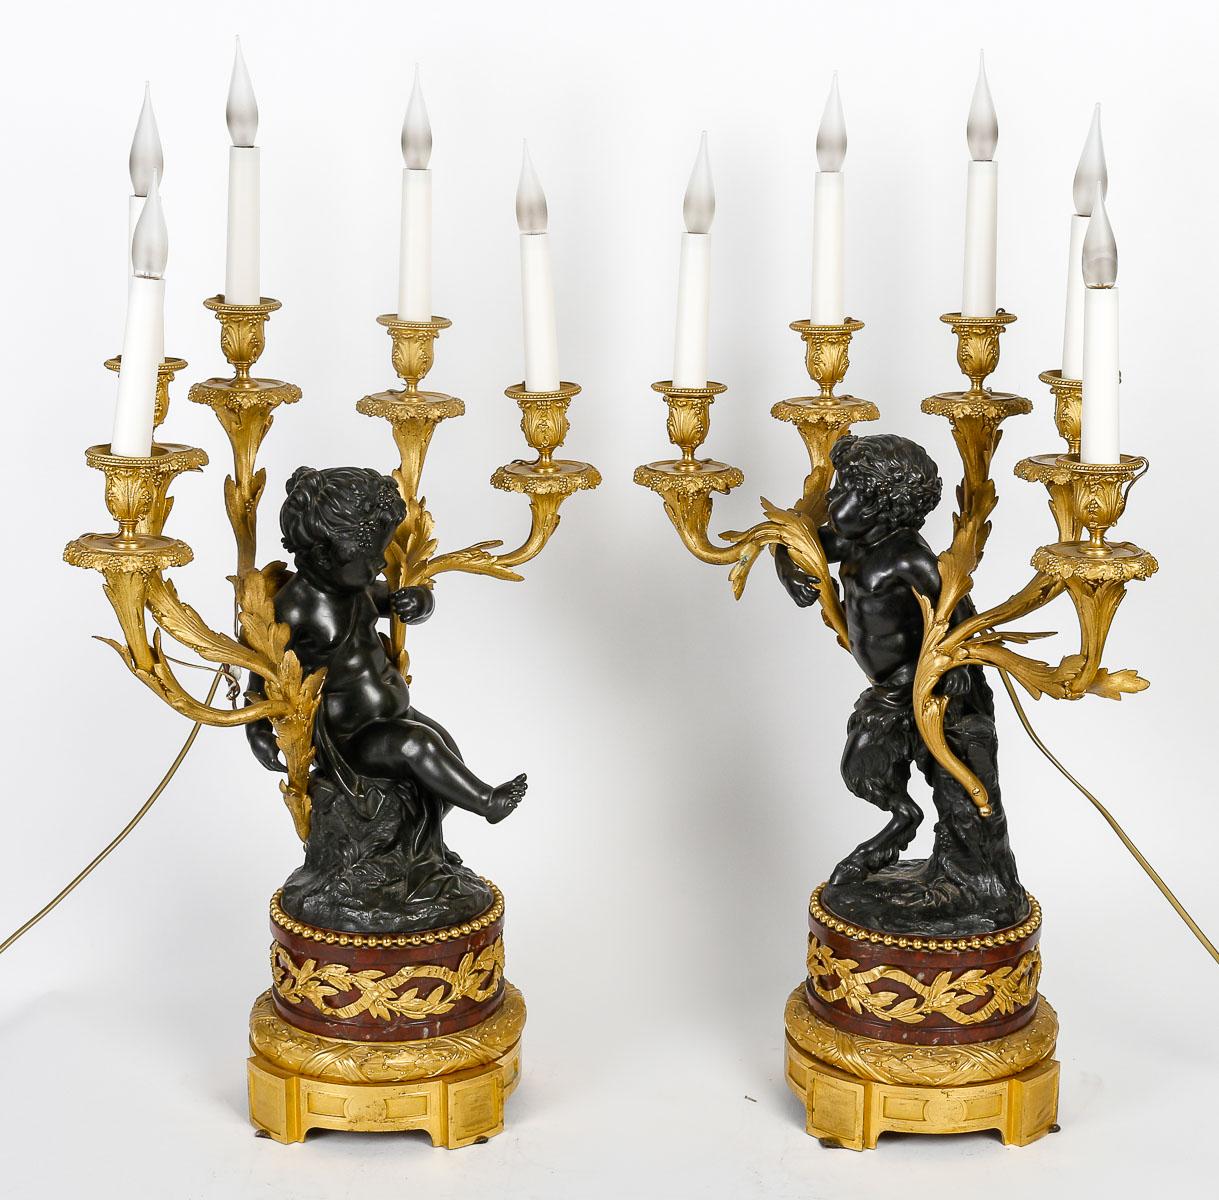 Pair of Amours Candelabra, Grande décoration, Gilt bronze, Antique bronze. 3